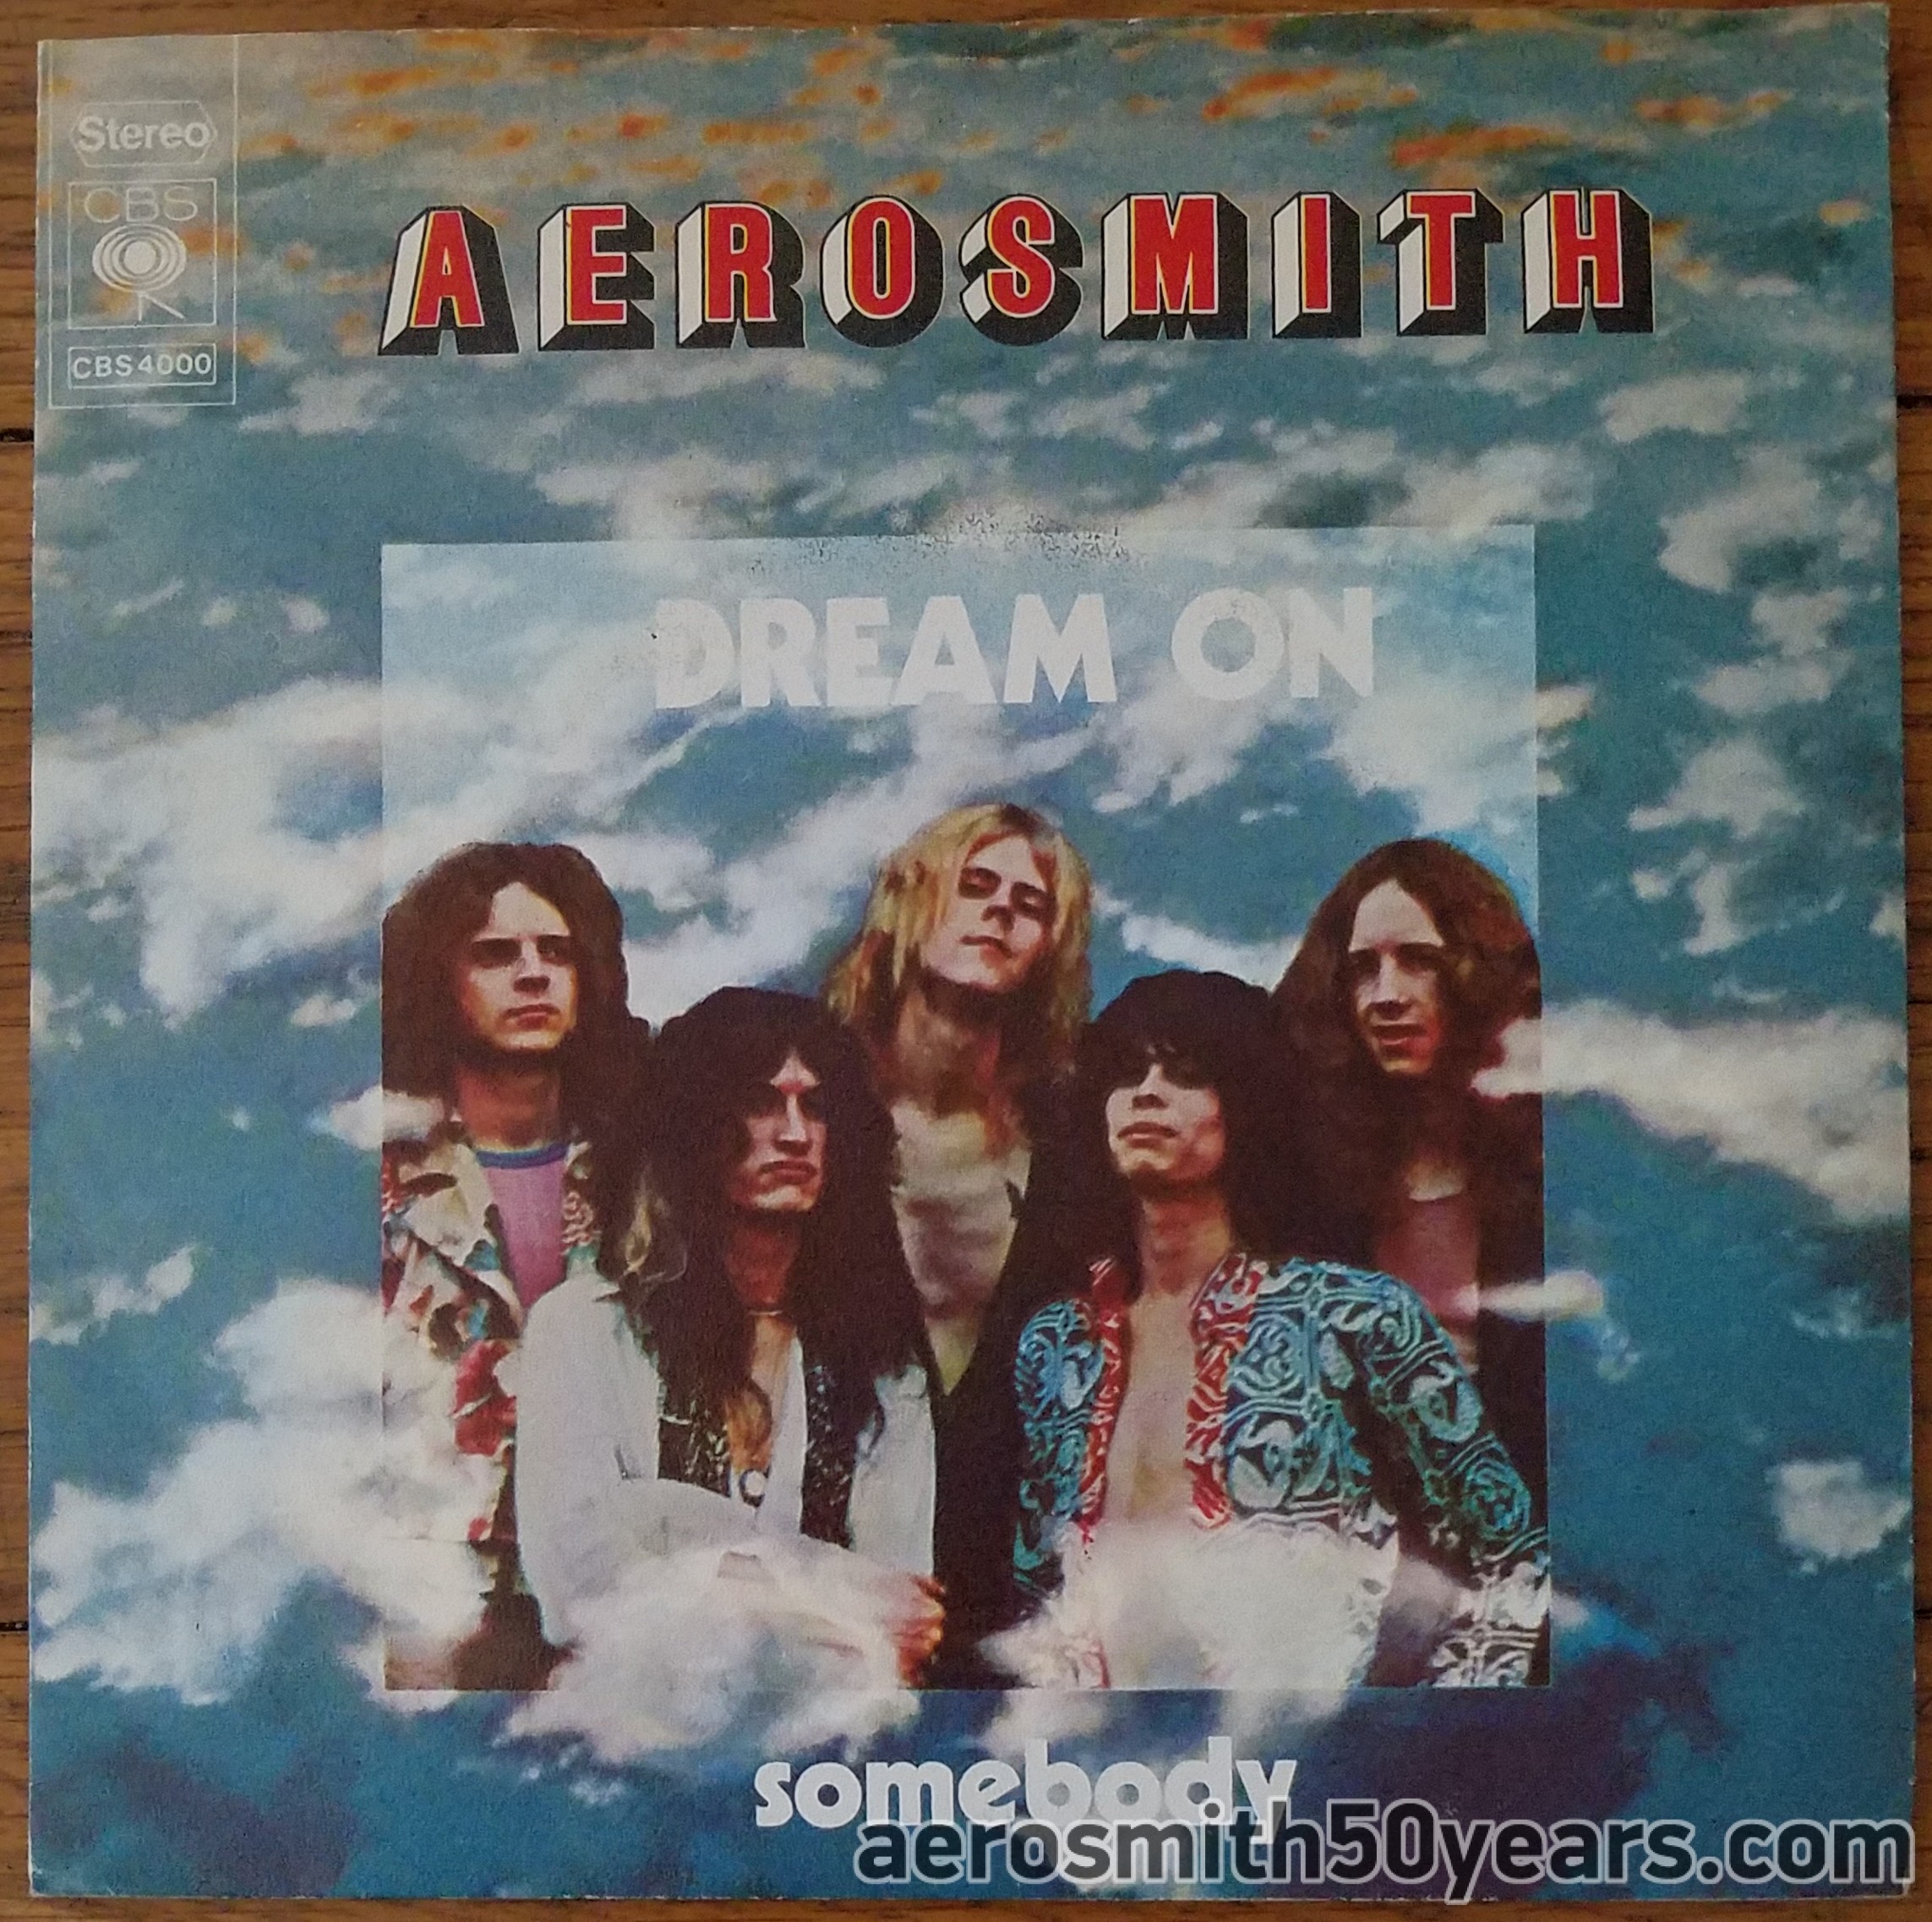 Включи dream on. Обложки Aerosmith 1973. Аэросмит Дрим он. Aerosmith - Dream on 1973. Dream on Aerosmith обложка.